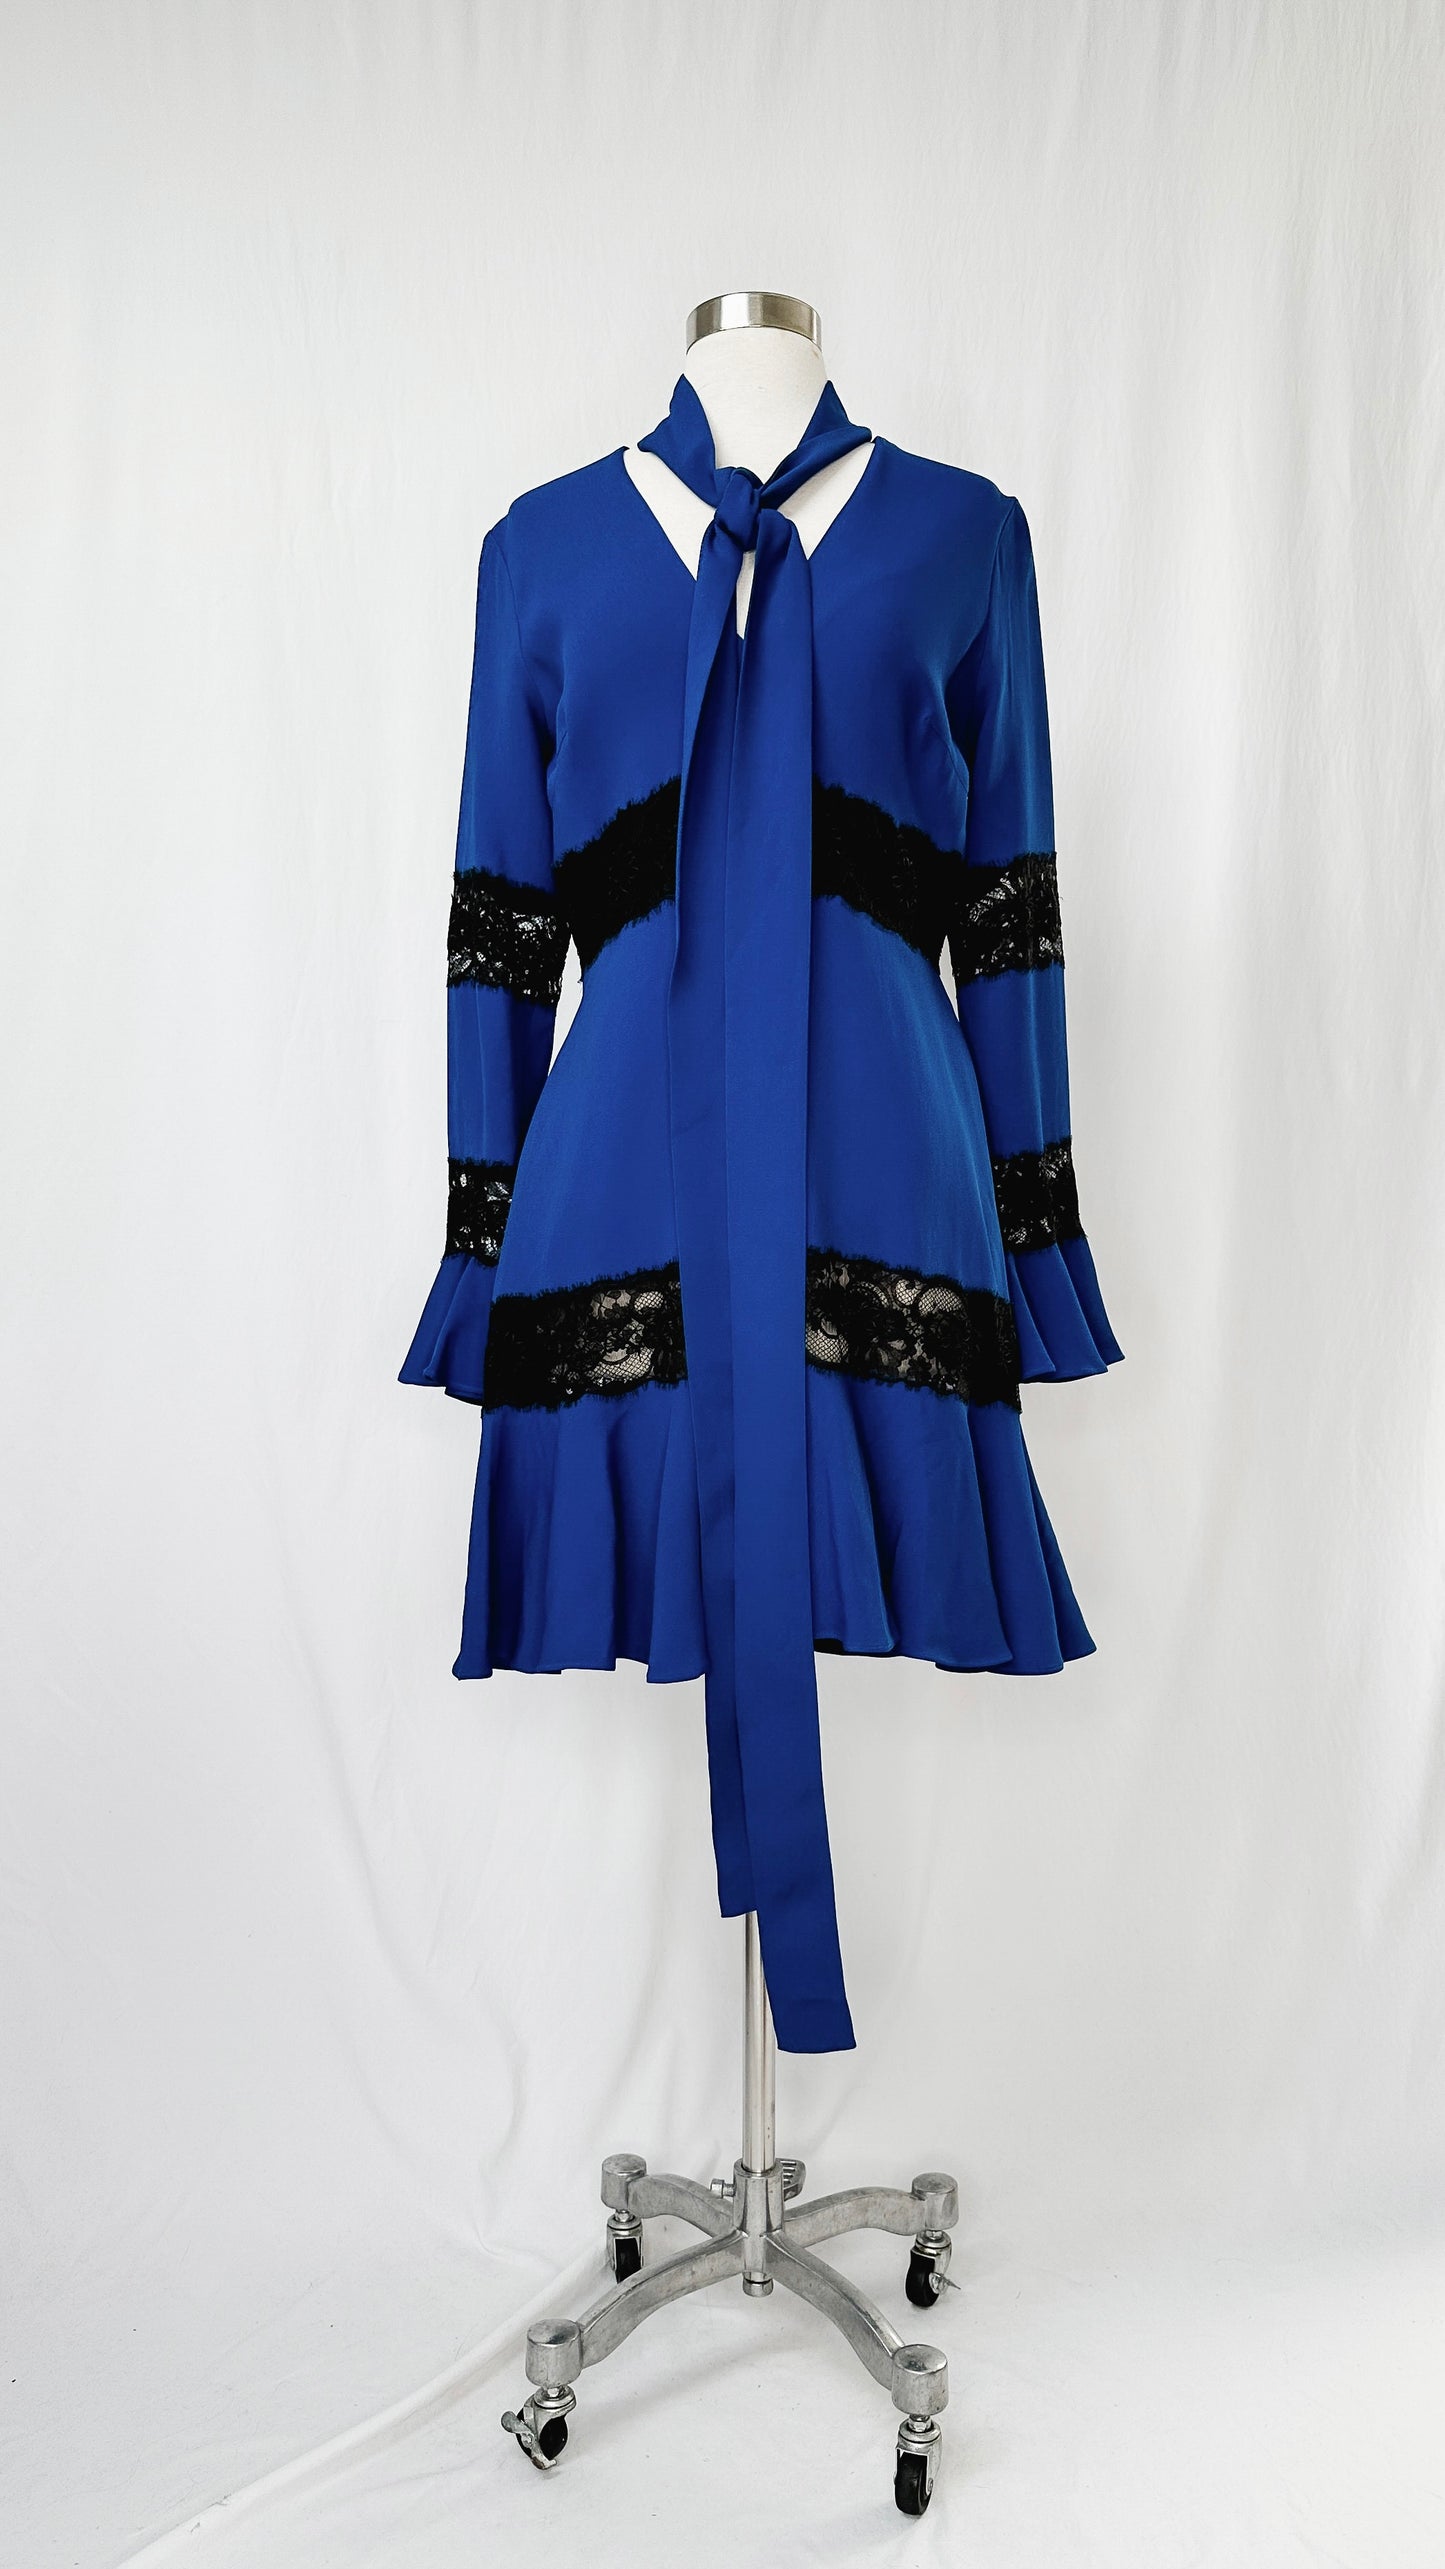 Elie Saab Blue & Black Lace Trumpet Sleeve Cocktail Dress (42 EU or 6 US)